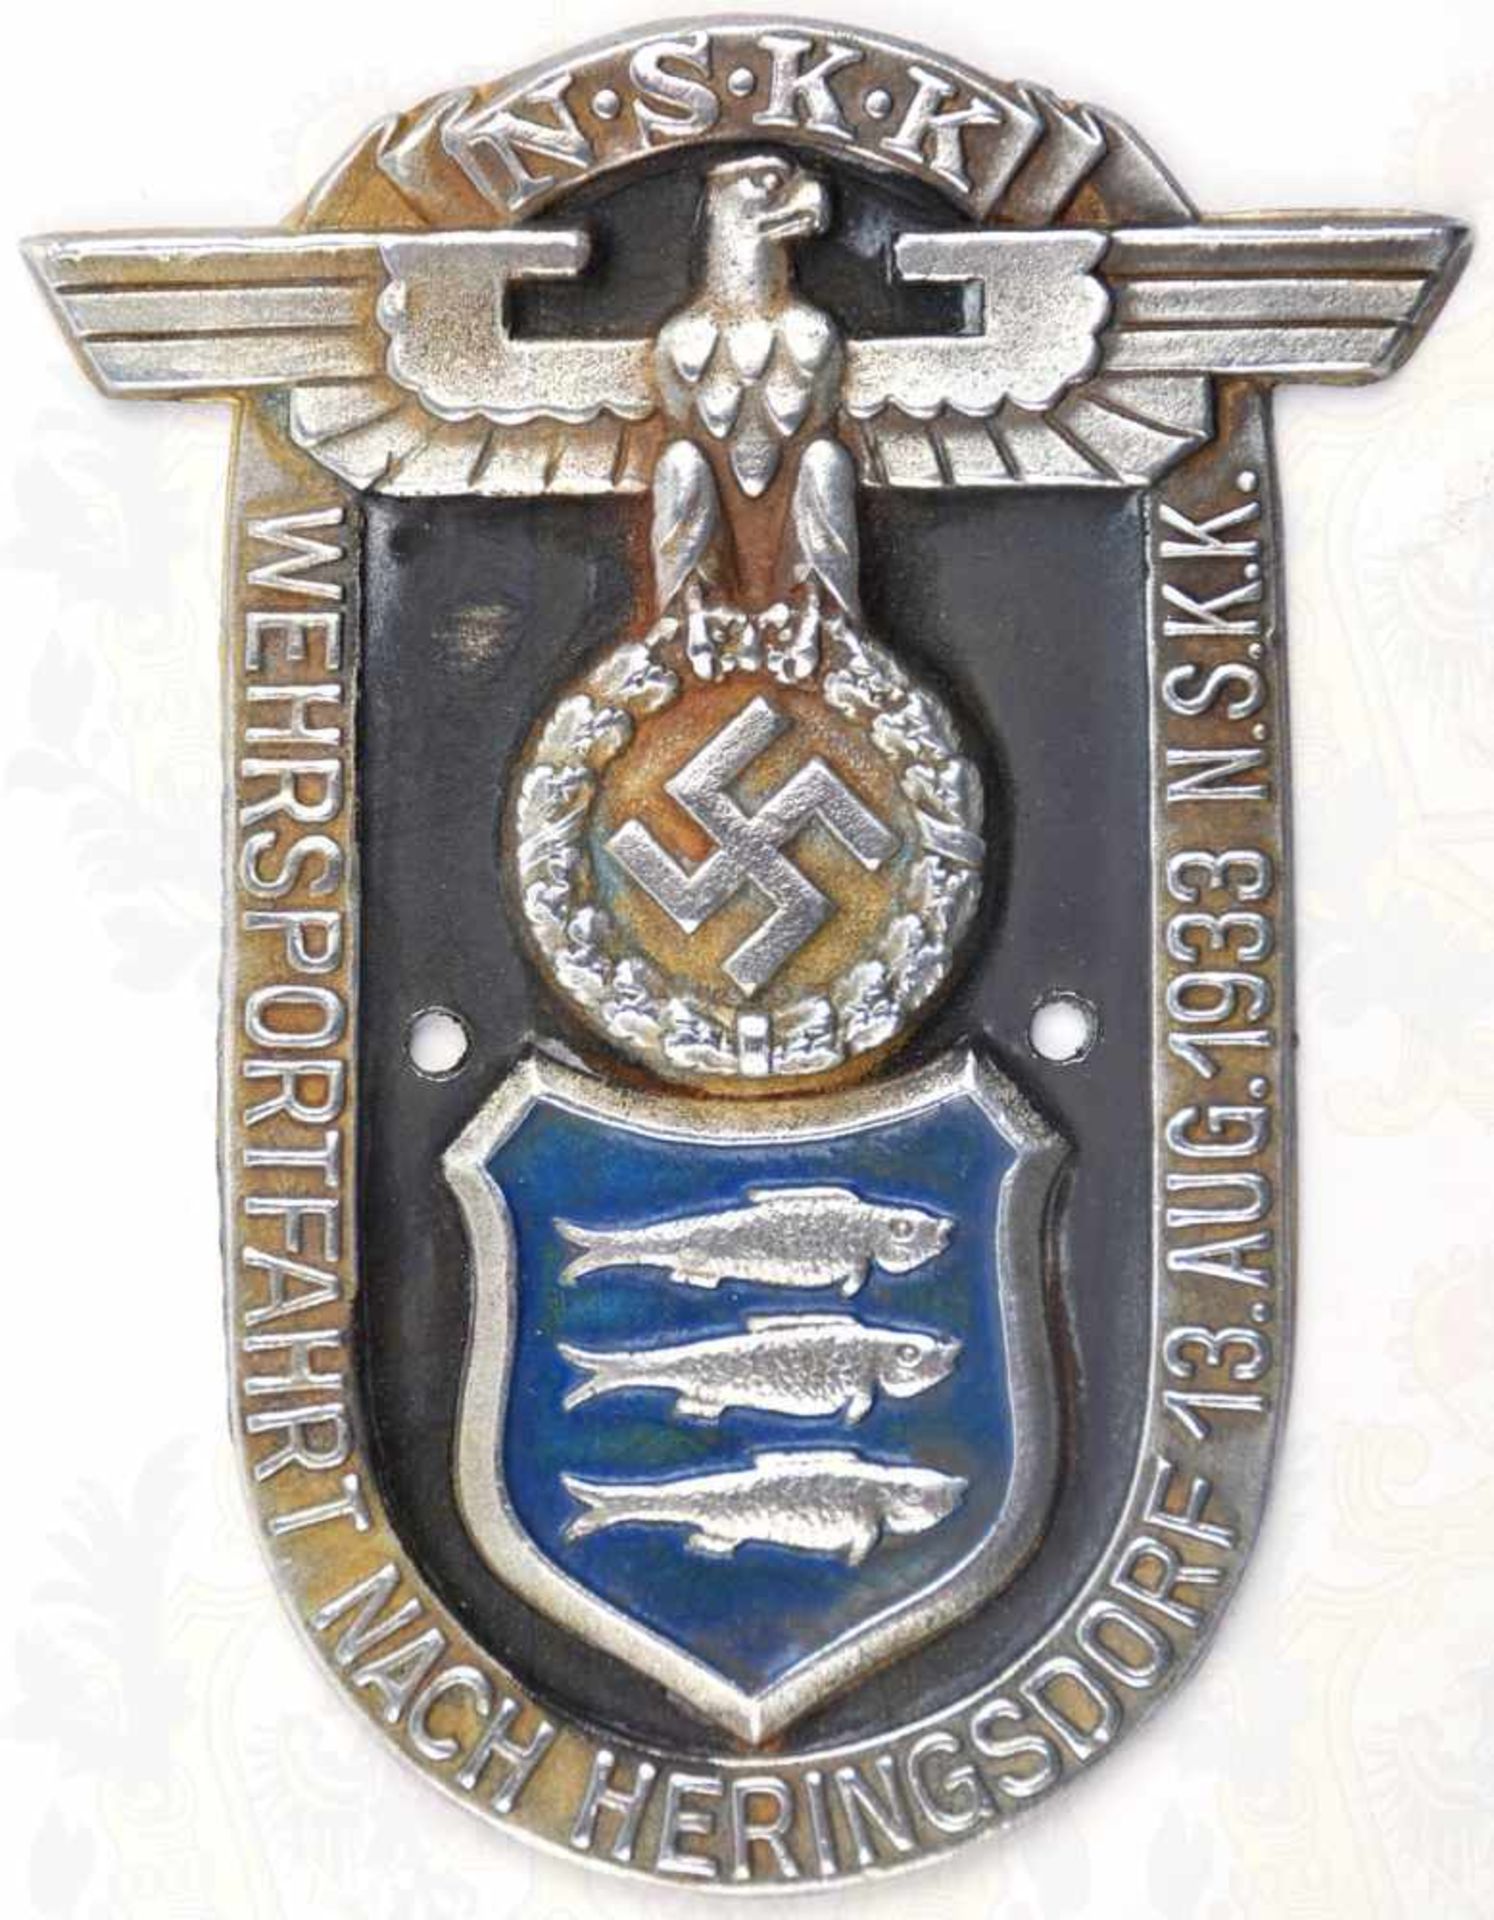 NSKK-WEHRSPORTFAHRT NACH HERINGSDORF 1933, Sammleranfertigung, Leichtmetall, tls. schwarz/blau